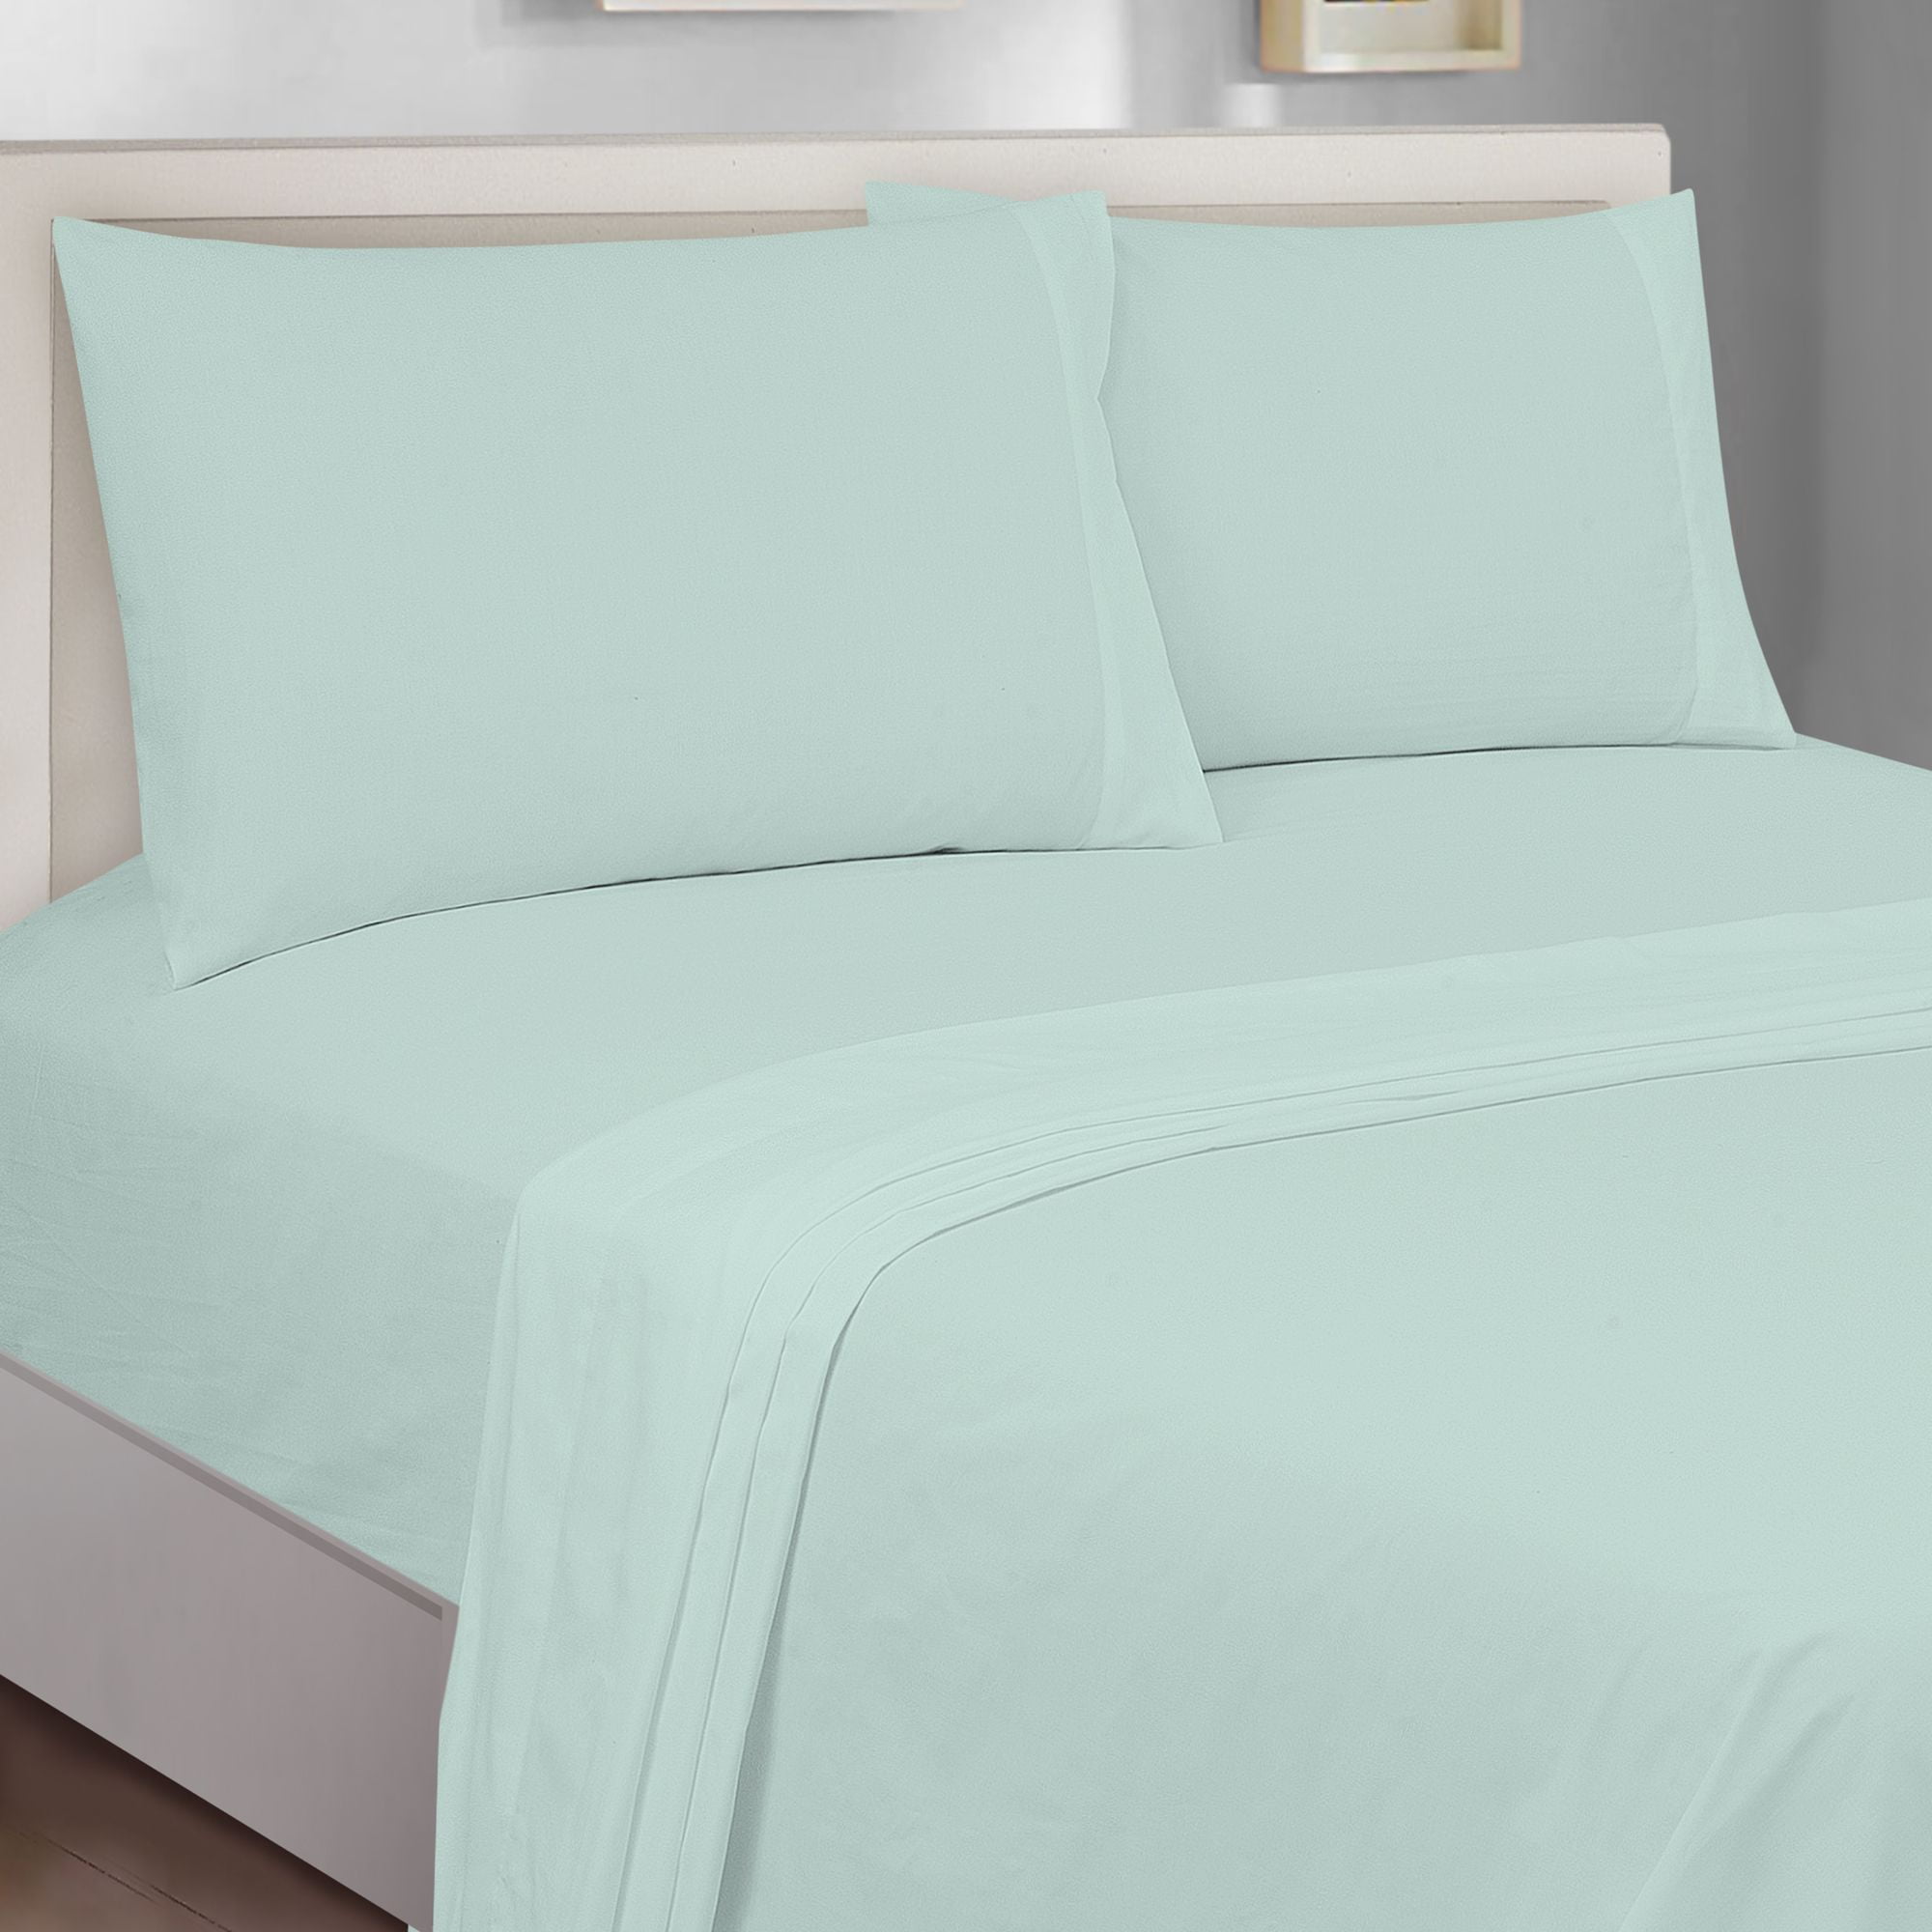 Pillow cases covers Pairs Easycare Poly cotton Fine best Quality plain colours 